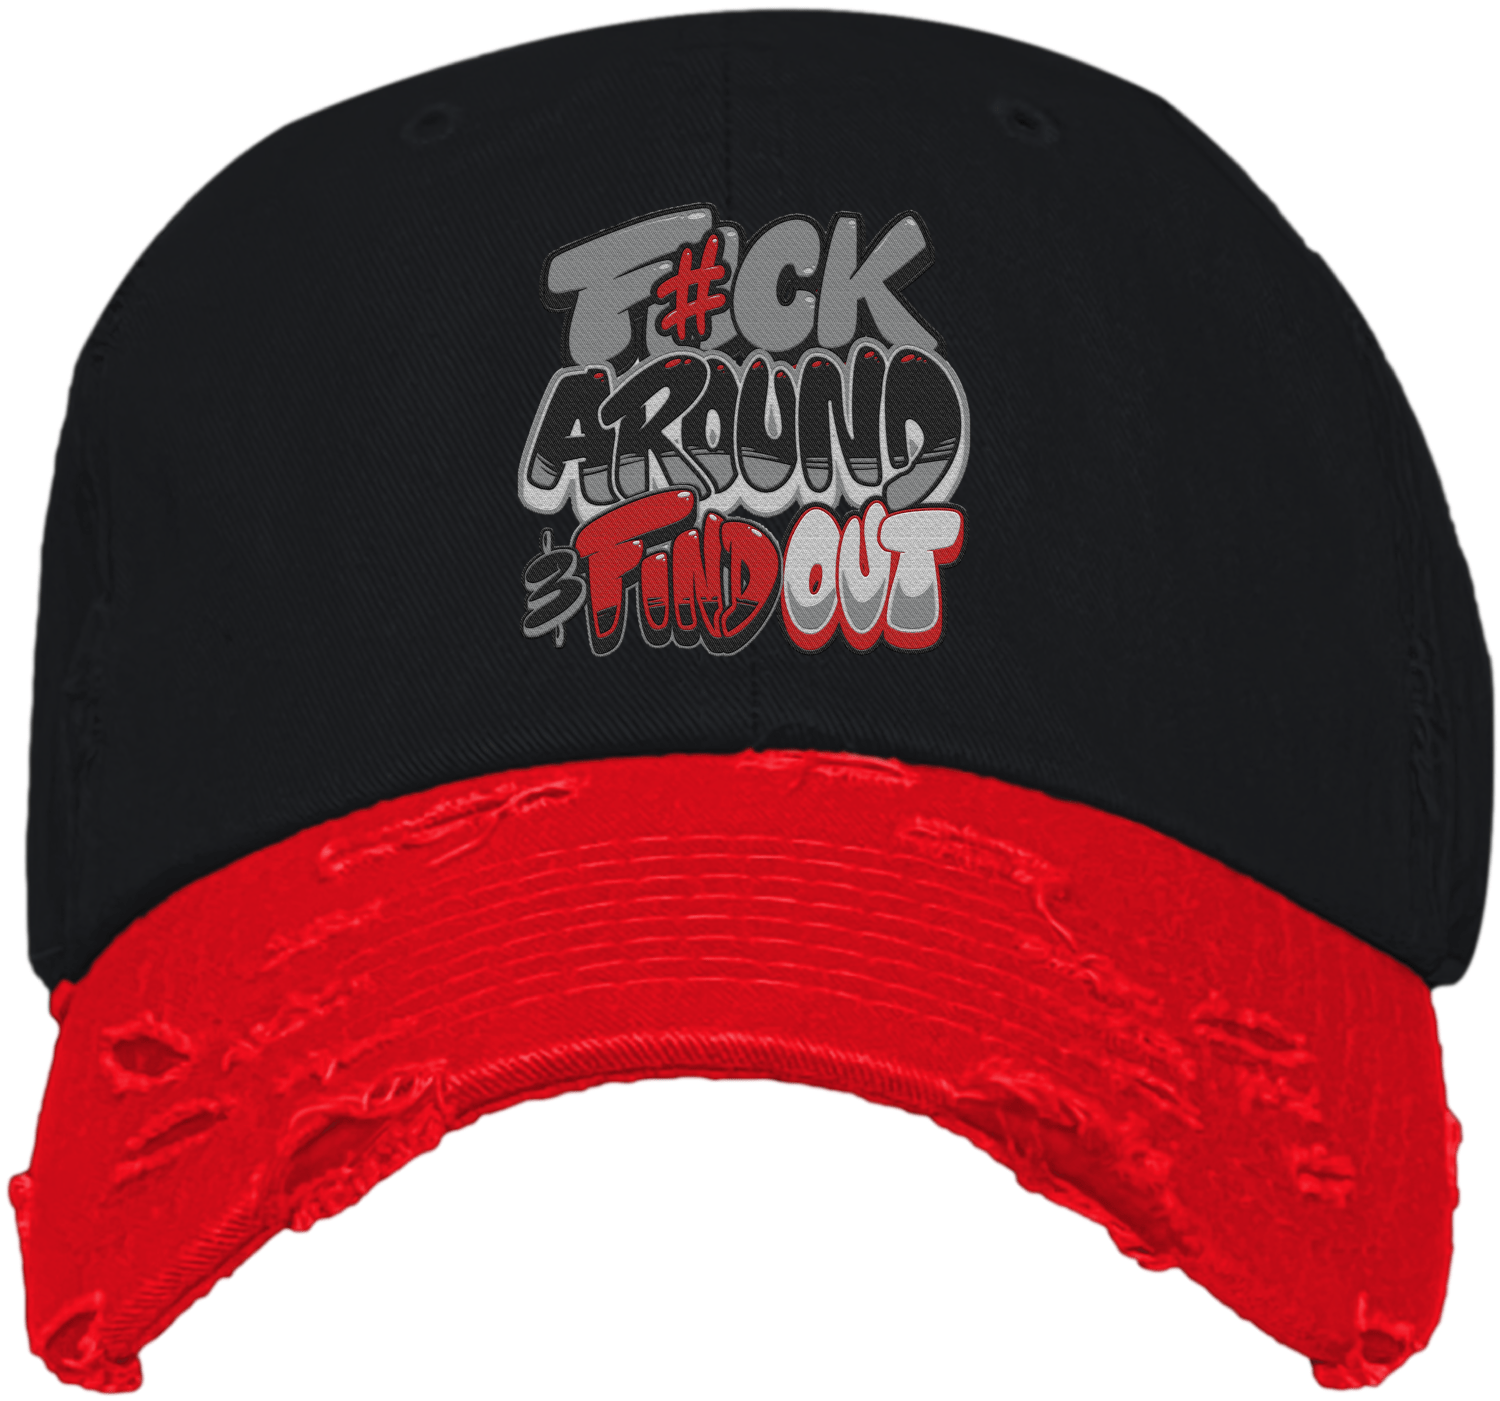 Cherry 12s Dad Hat - Jordan 12 Cherry Hats - Red F#ck